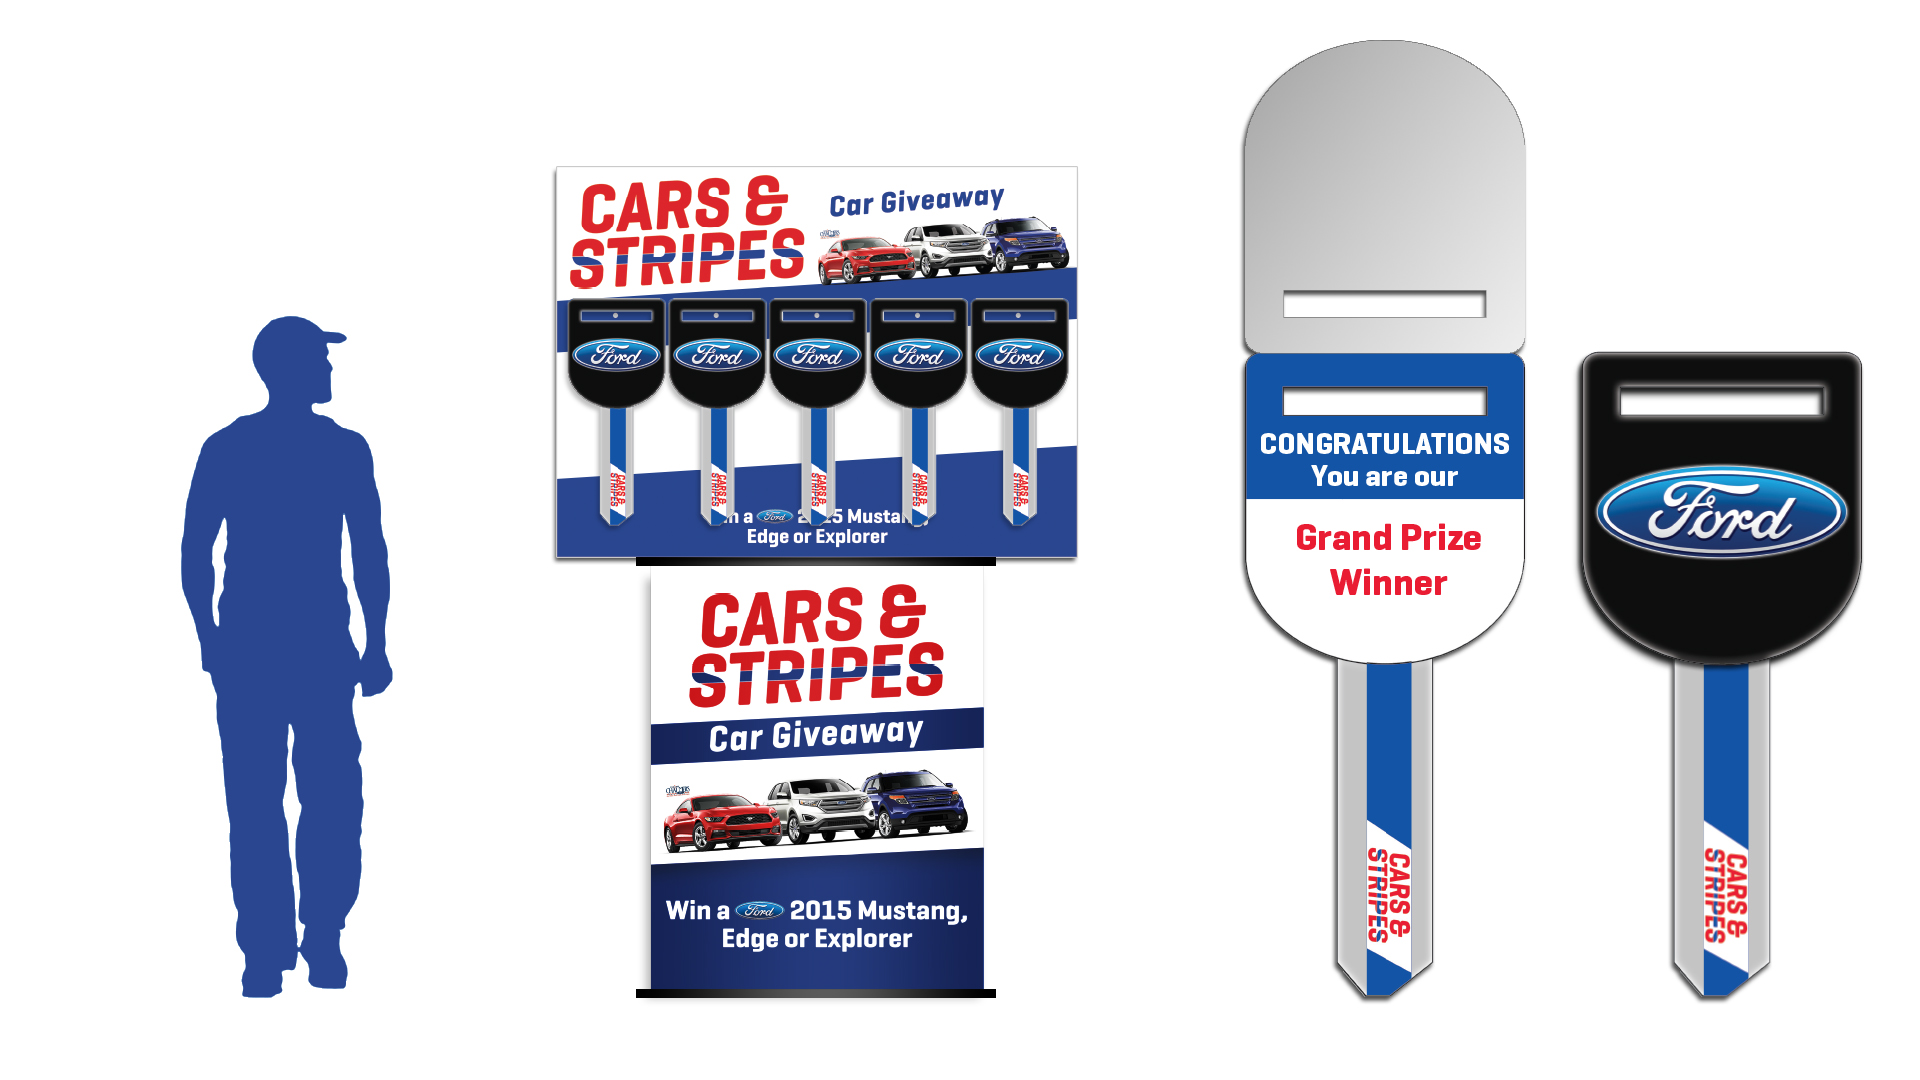 Cars & Stripes